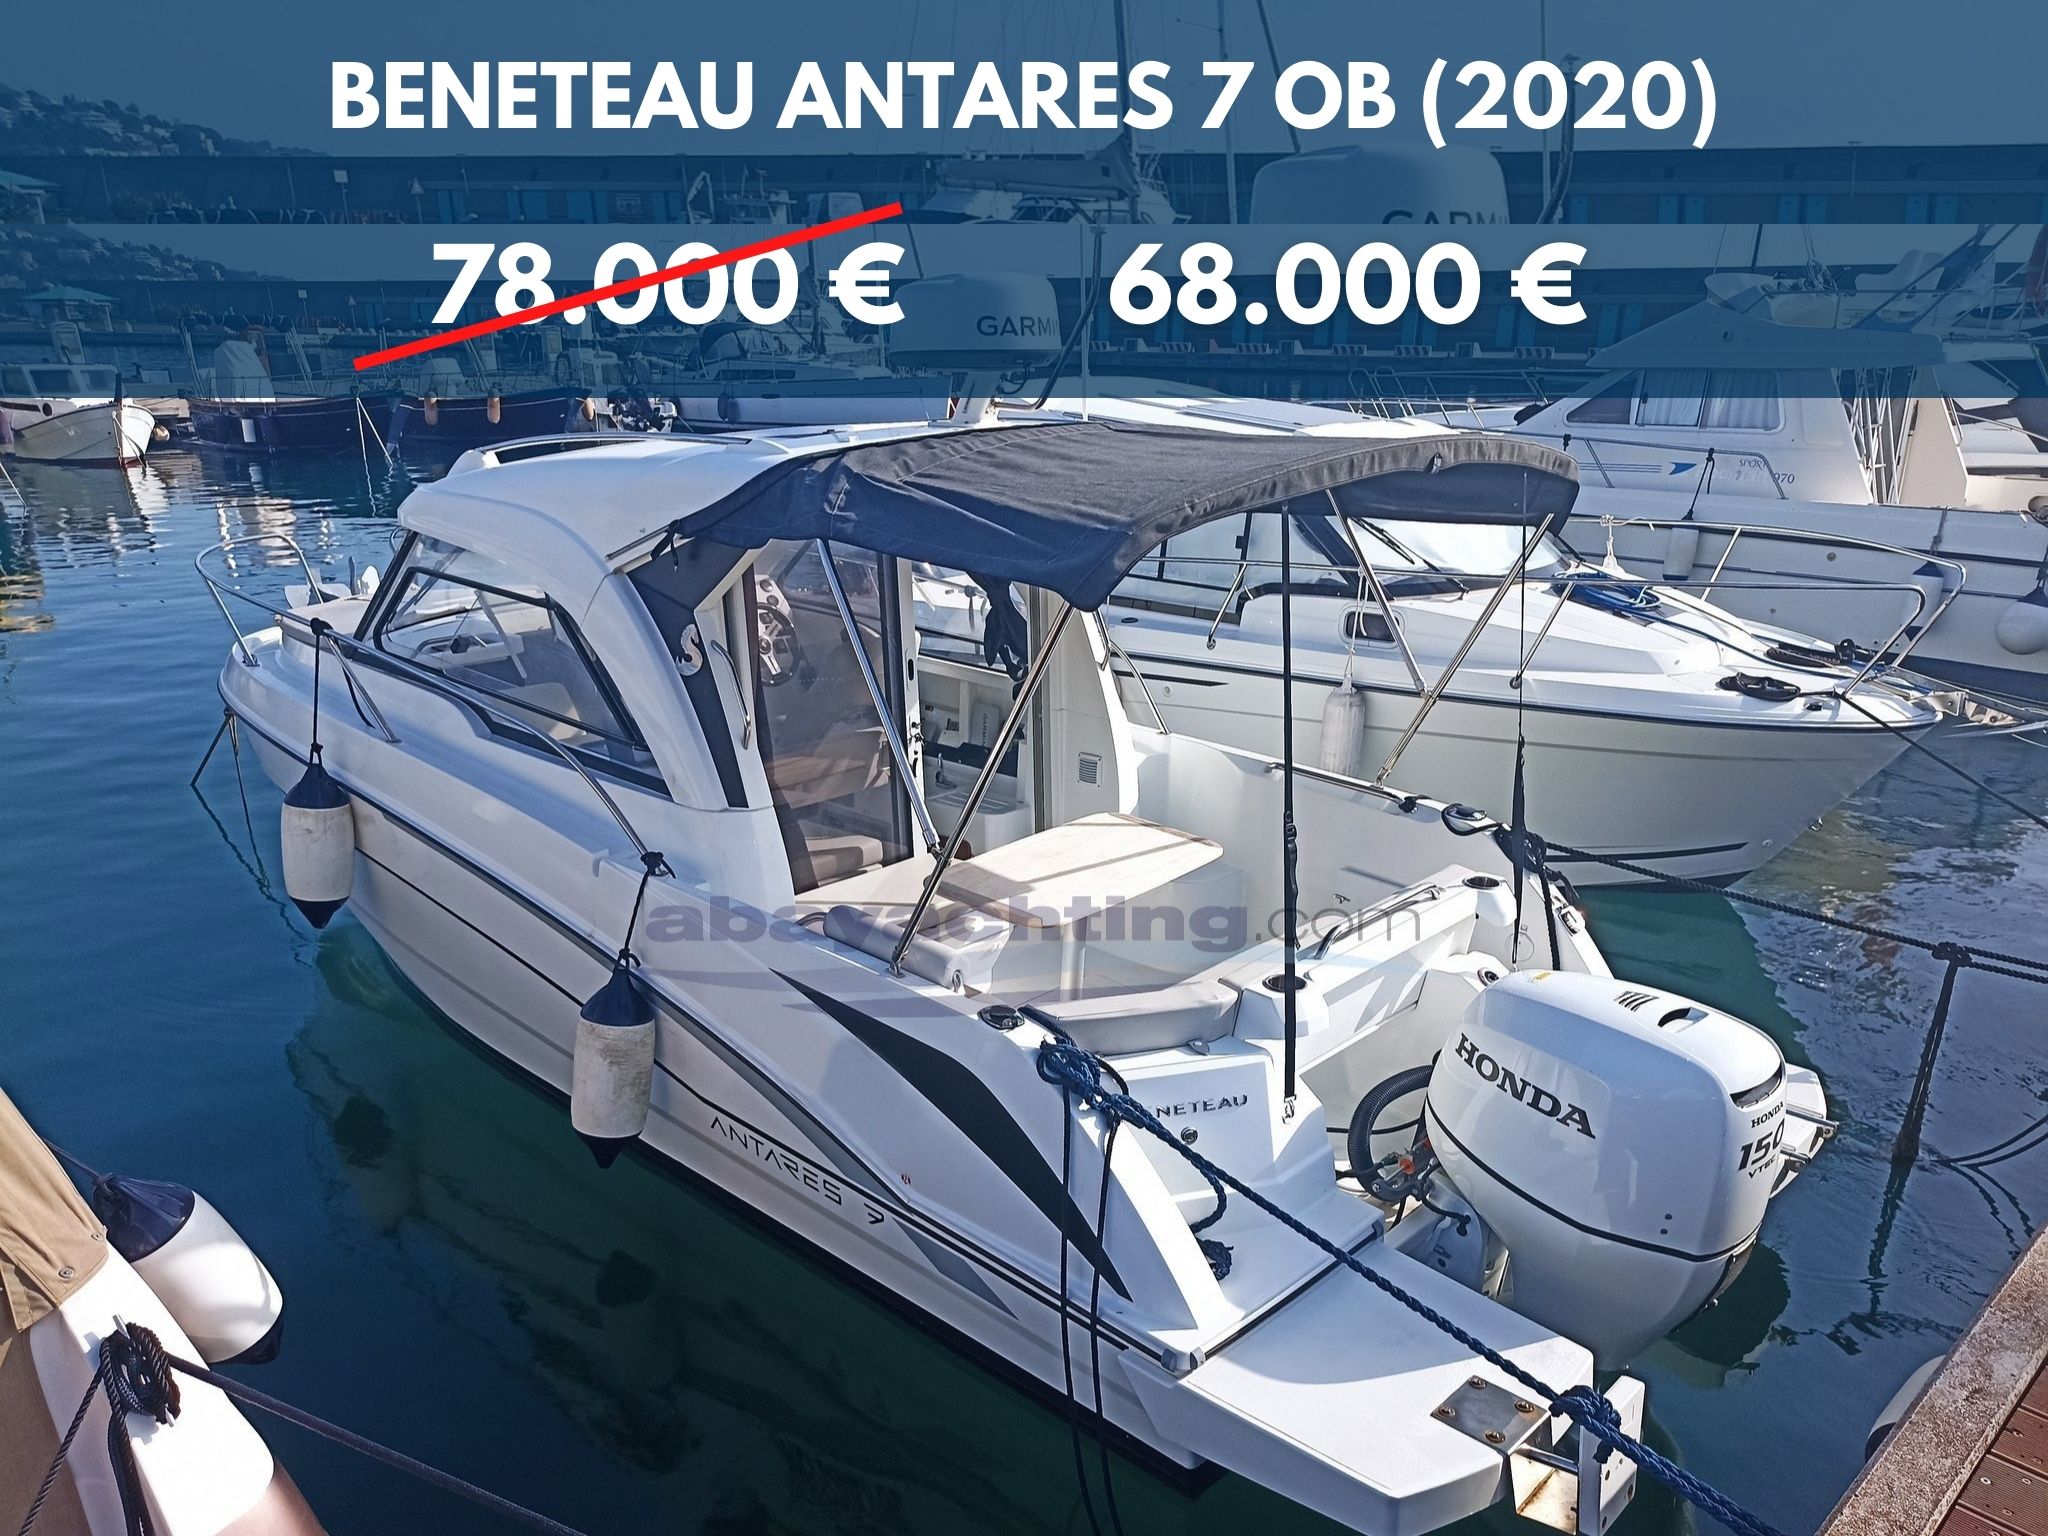 New Price: Beneteau Antares 7 Ob